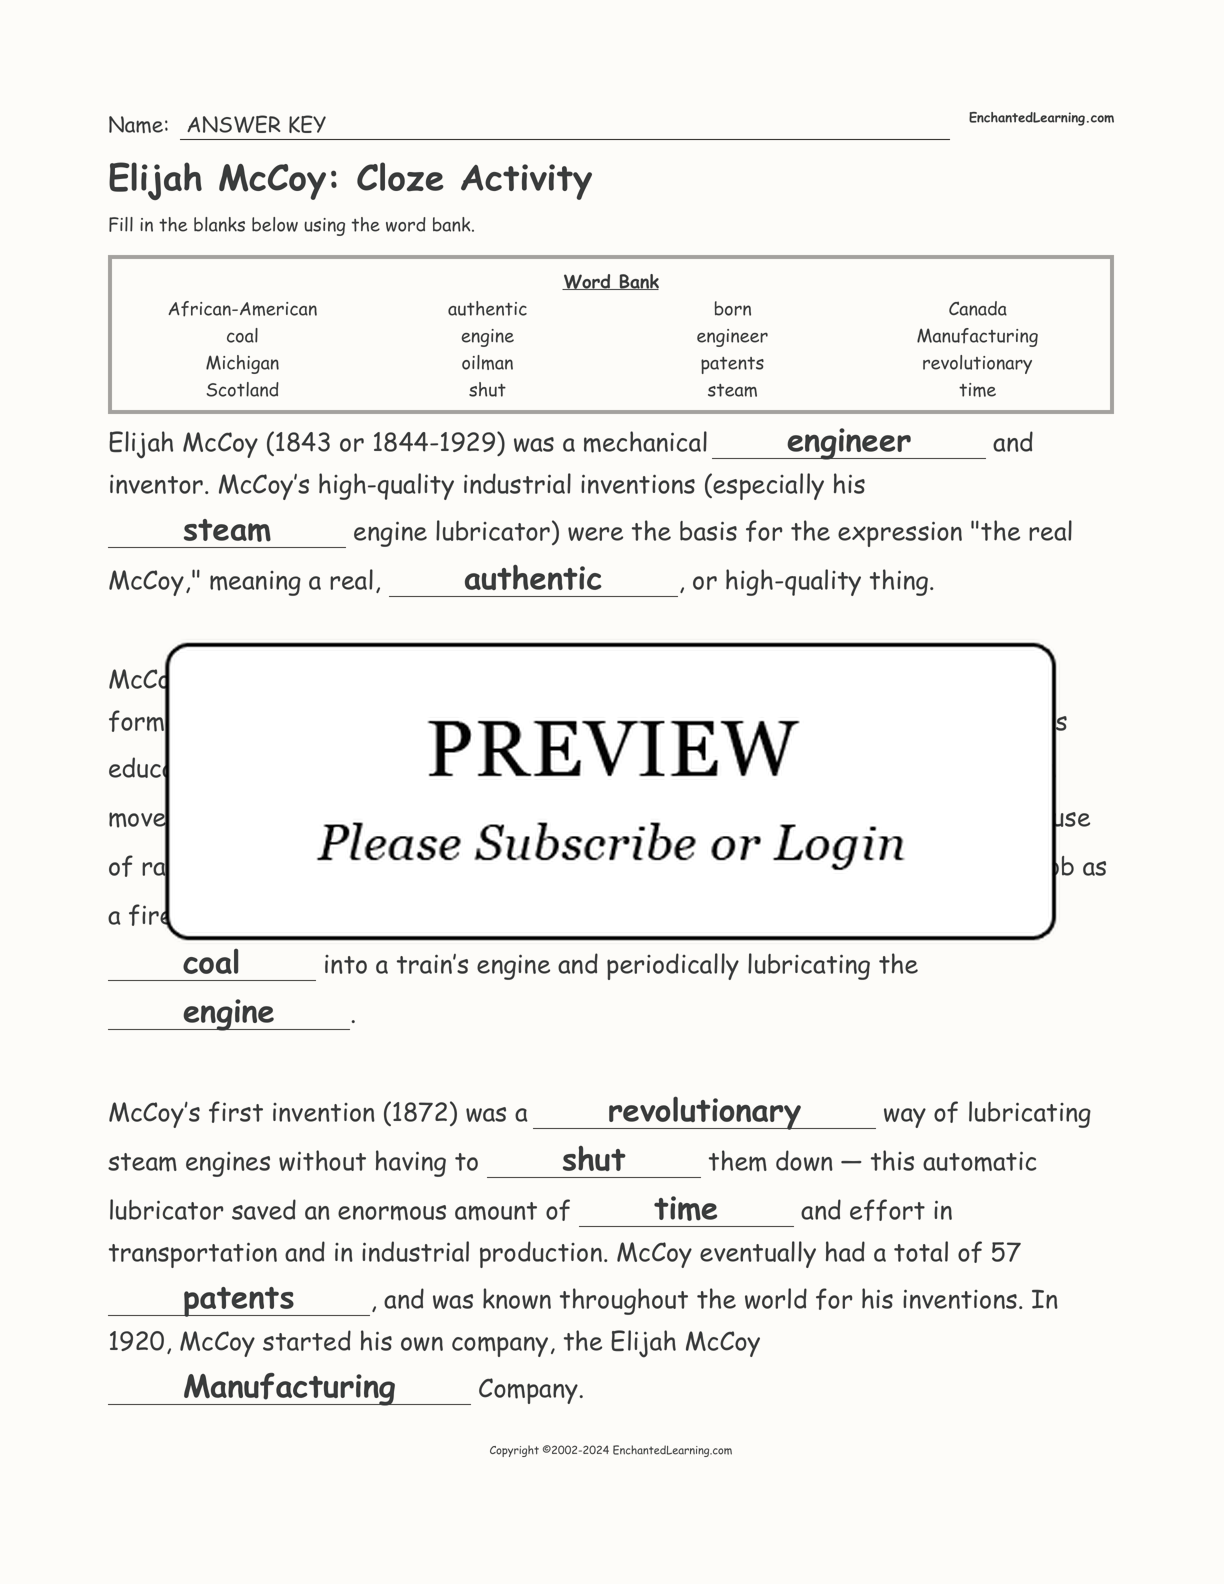 Elijah McCoy: Cloze Activity interactive worksheet page 2